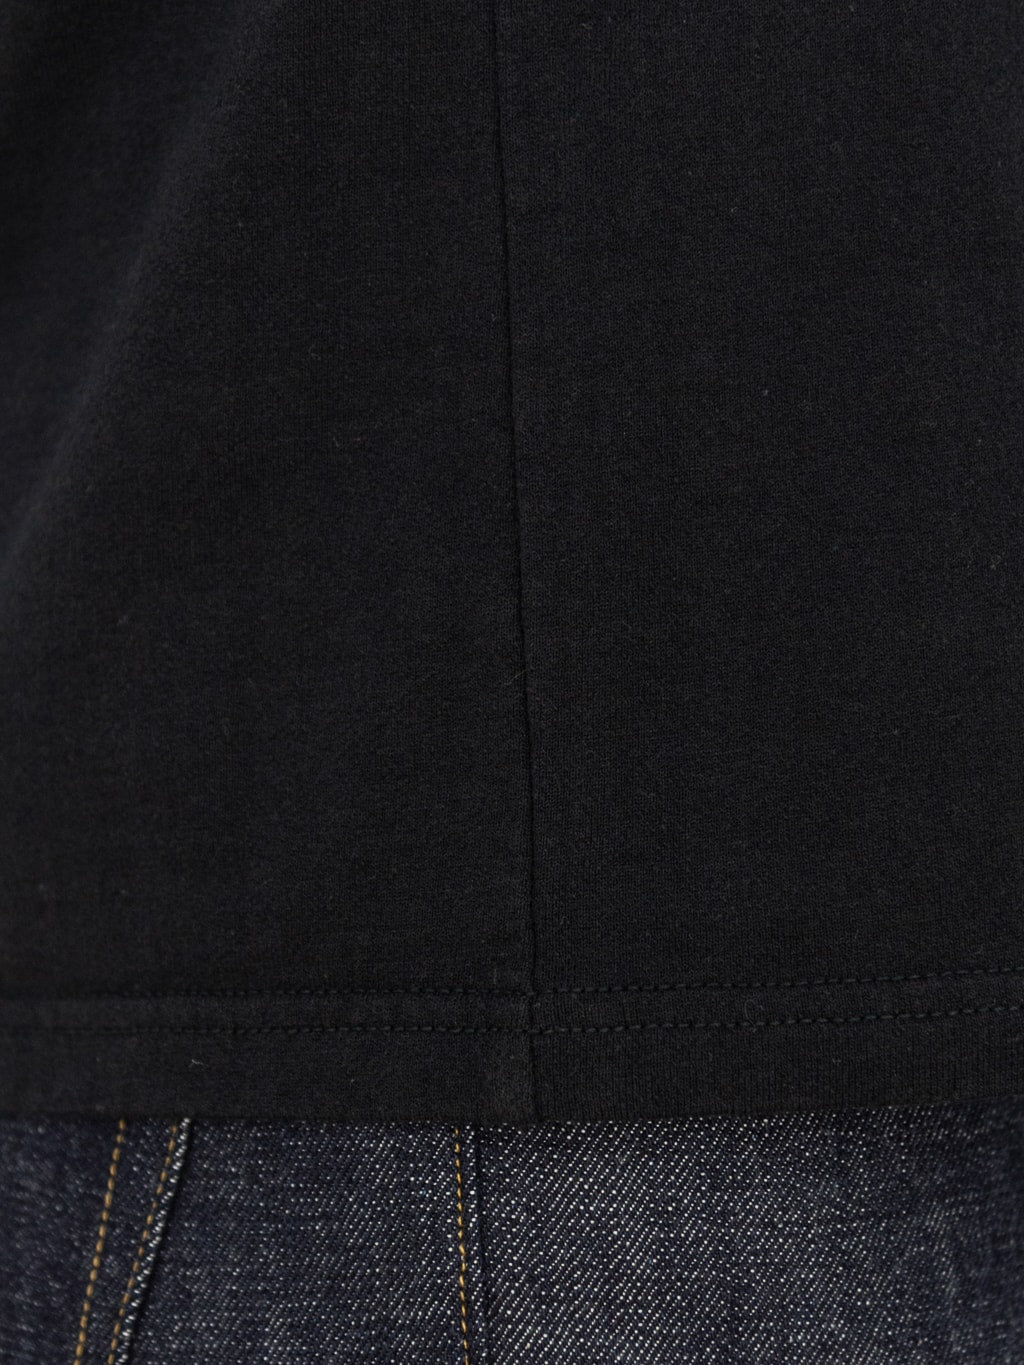 Samurai Jeans Loopwheel Ripened Cotton Tshirt Black cotton close up